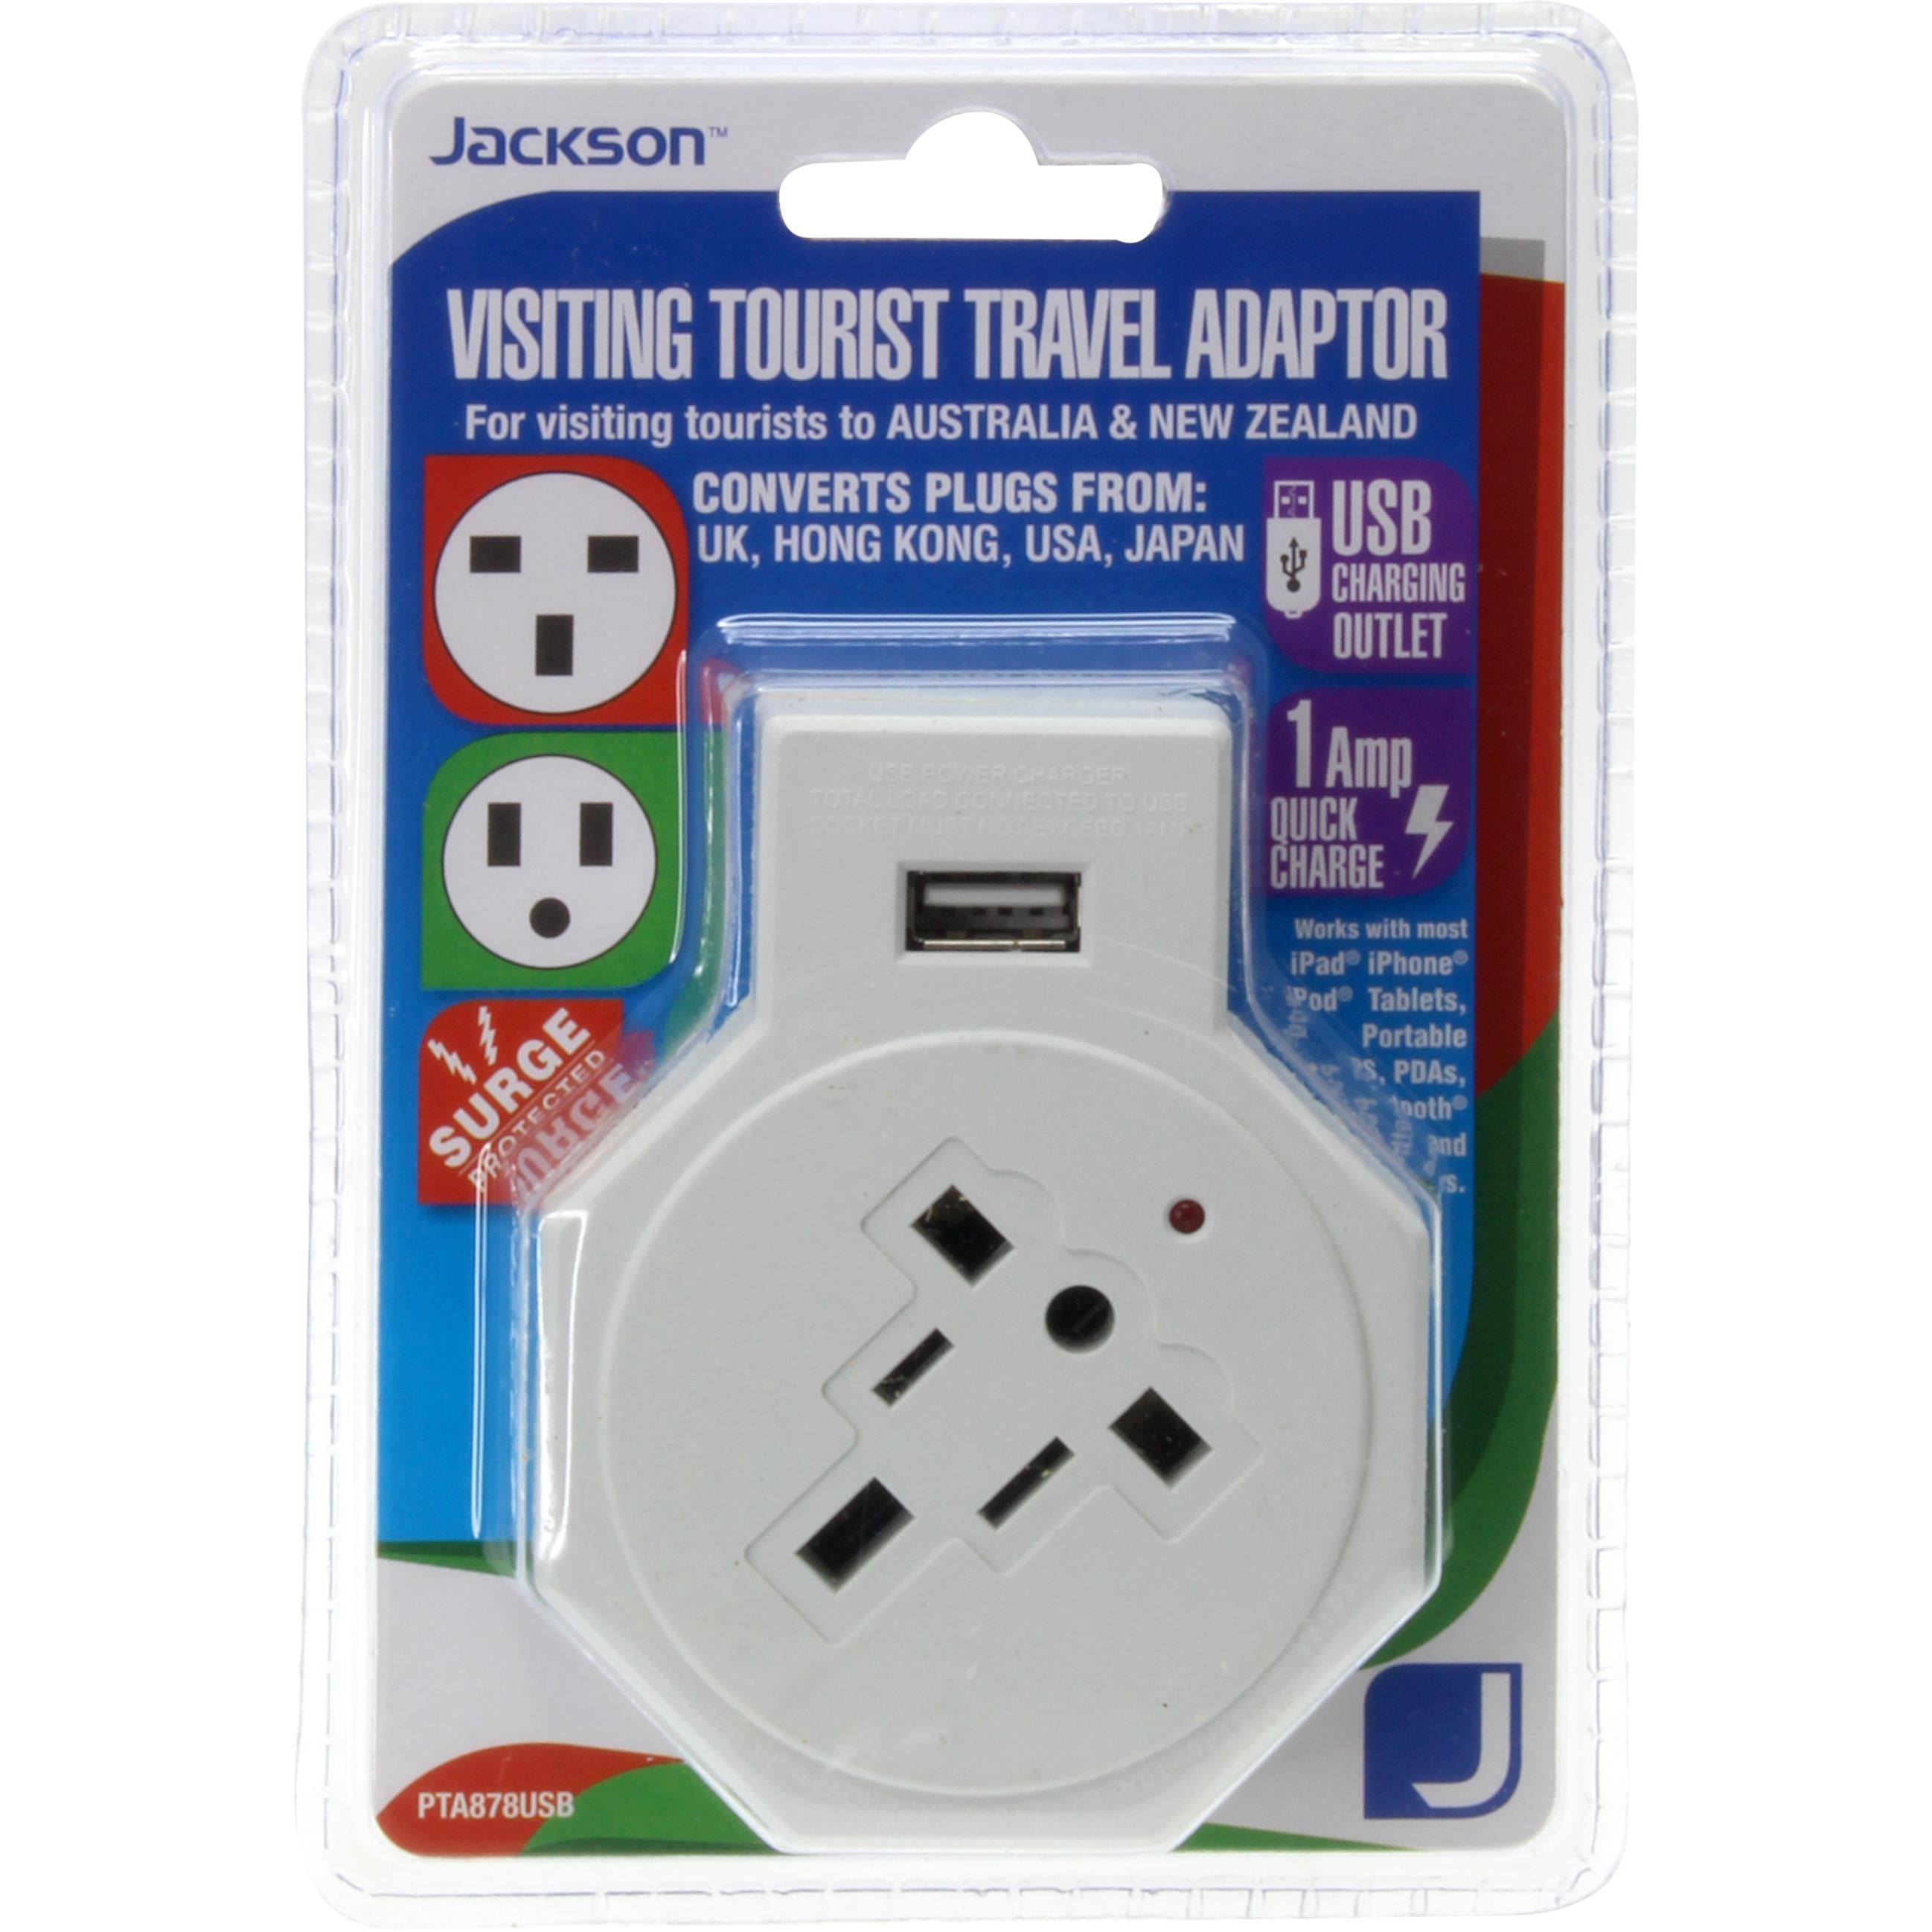 jackson incoming travel adaptor with usb charging (usa, uk, japan & europe)